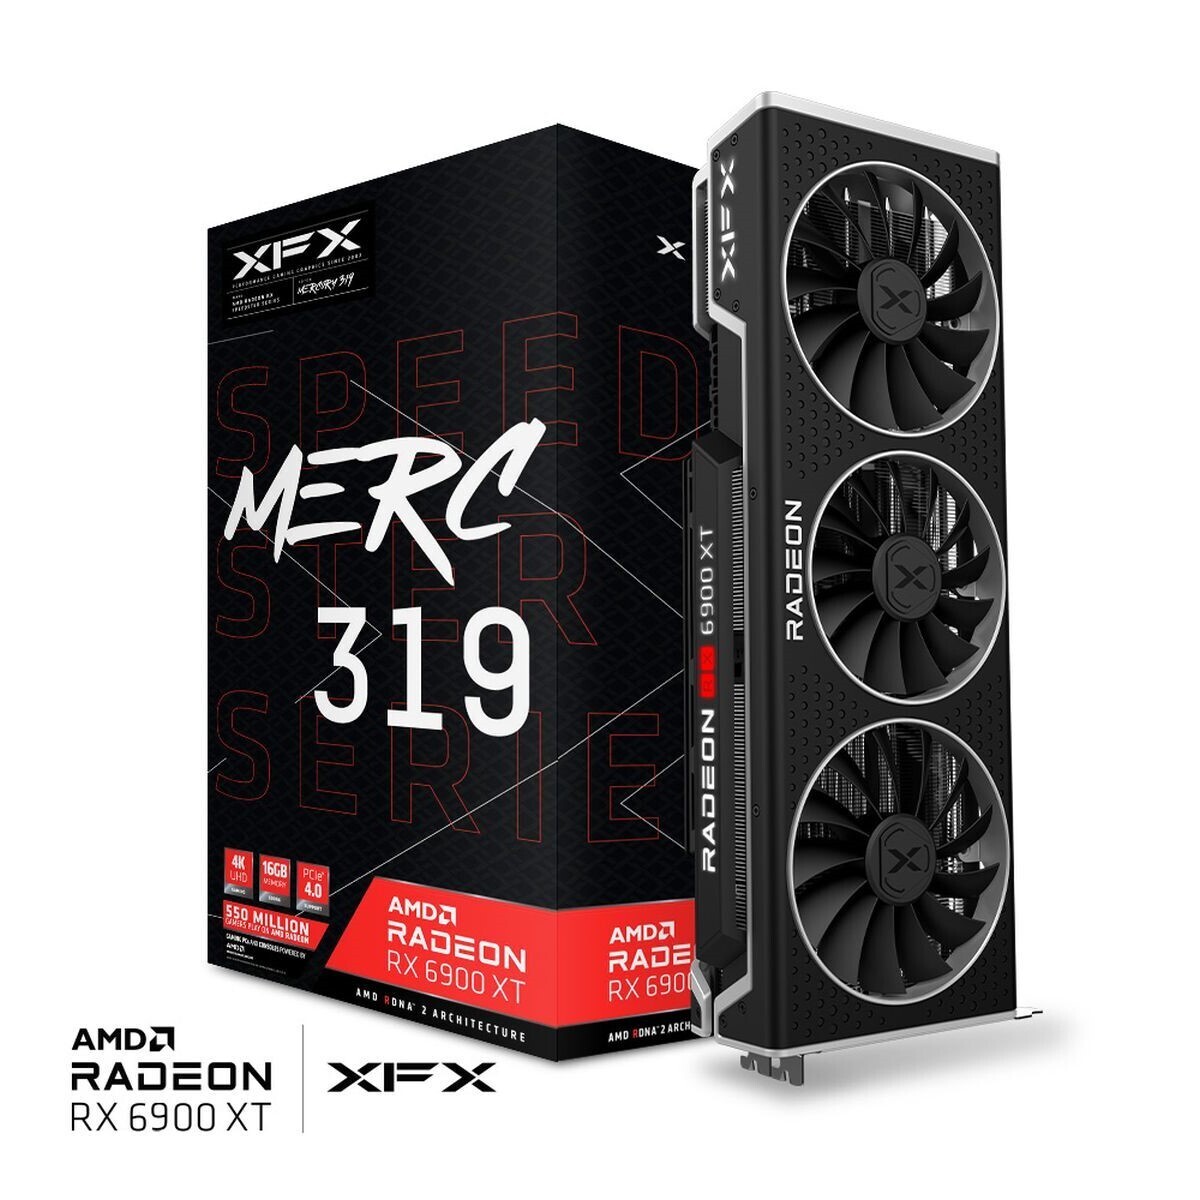 XFX SPEEDSTER MERC 319 AMD Radeon RX 6900 XT BLACK, 16GB GDDR6